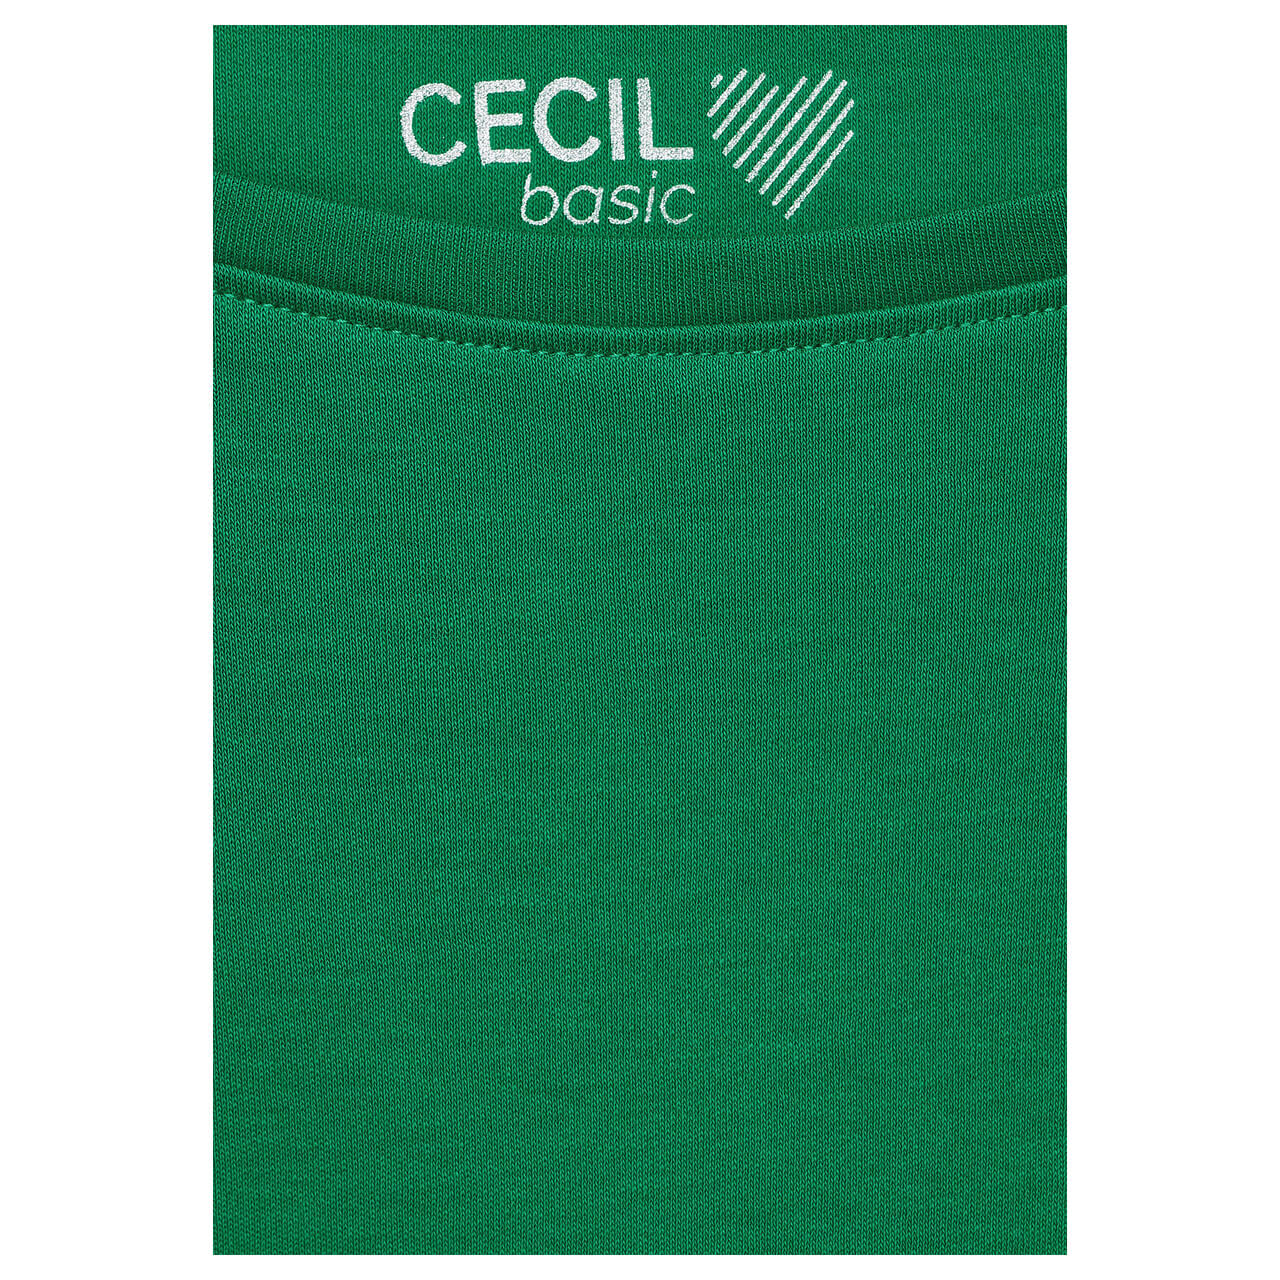 Cecil Damen 3/4 Arm Shirt Basic Boatneck easy green